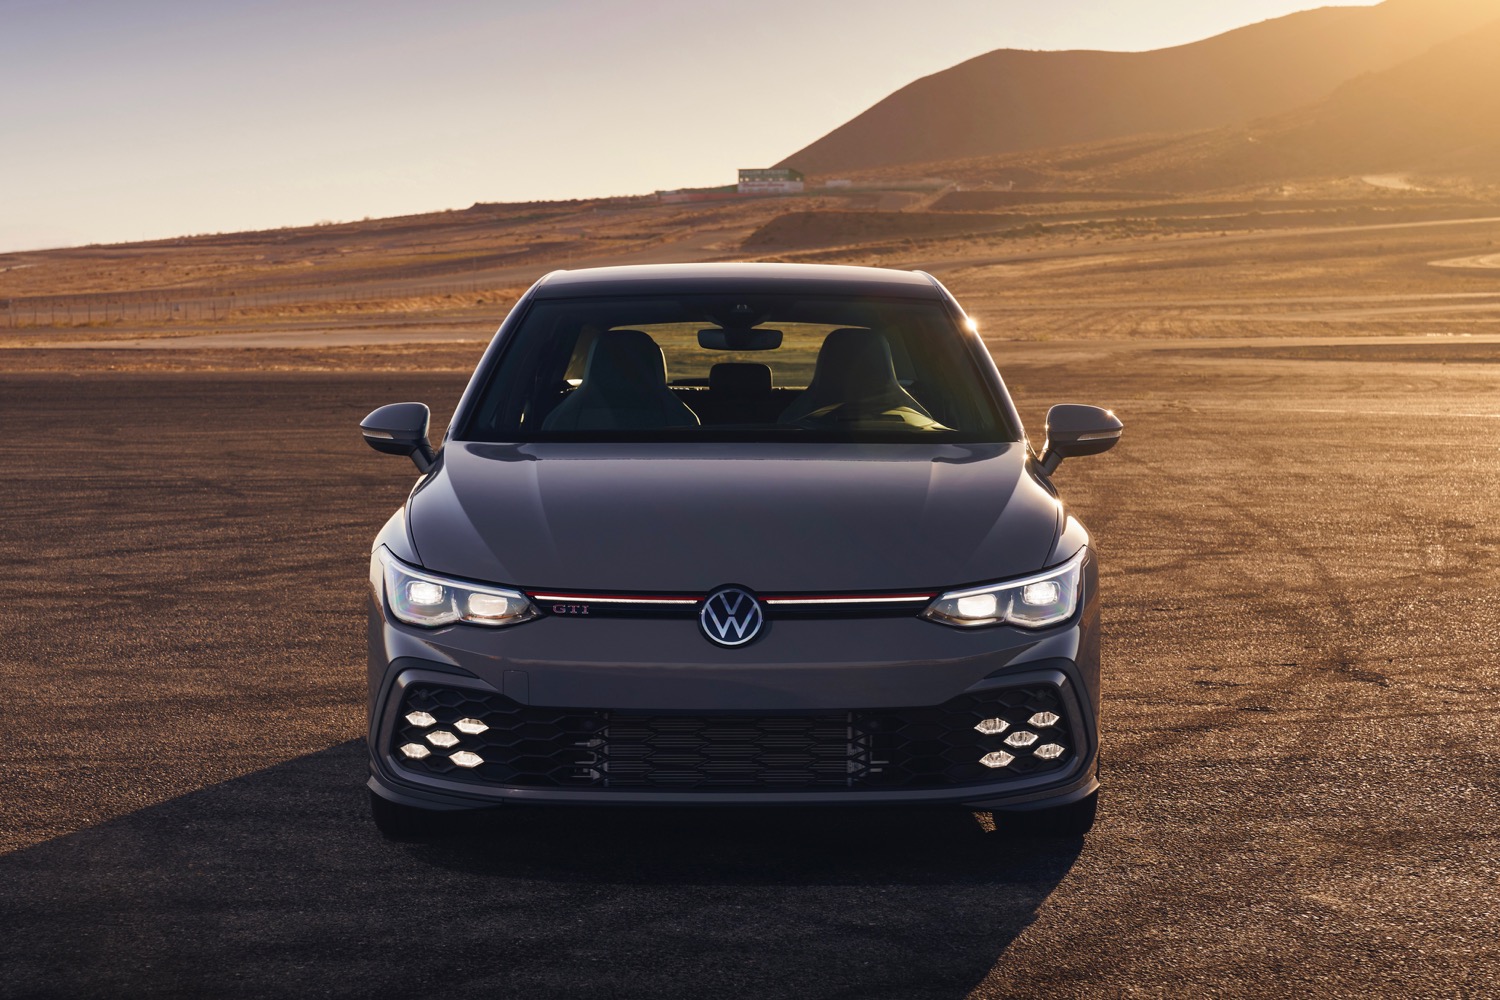 2022 Volkswagen Golf GTI and 2022 Volkswagen Golf R Preview